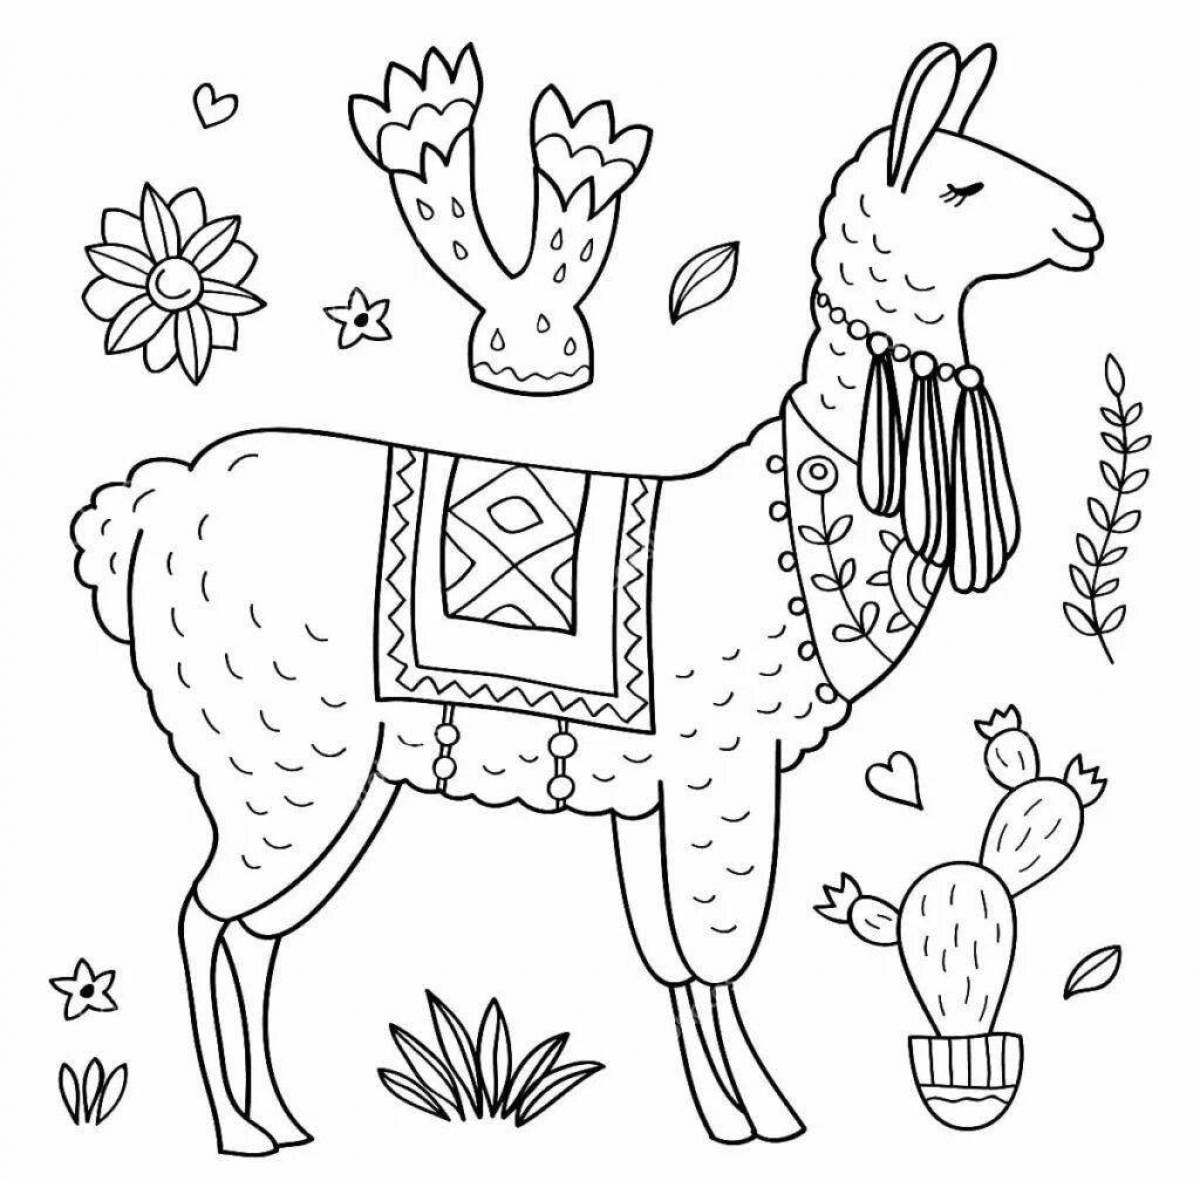 Fairy llama coloring book for kids